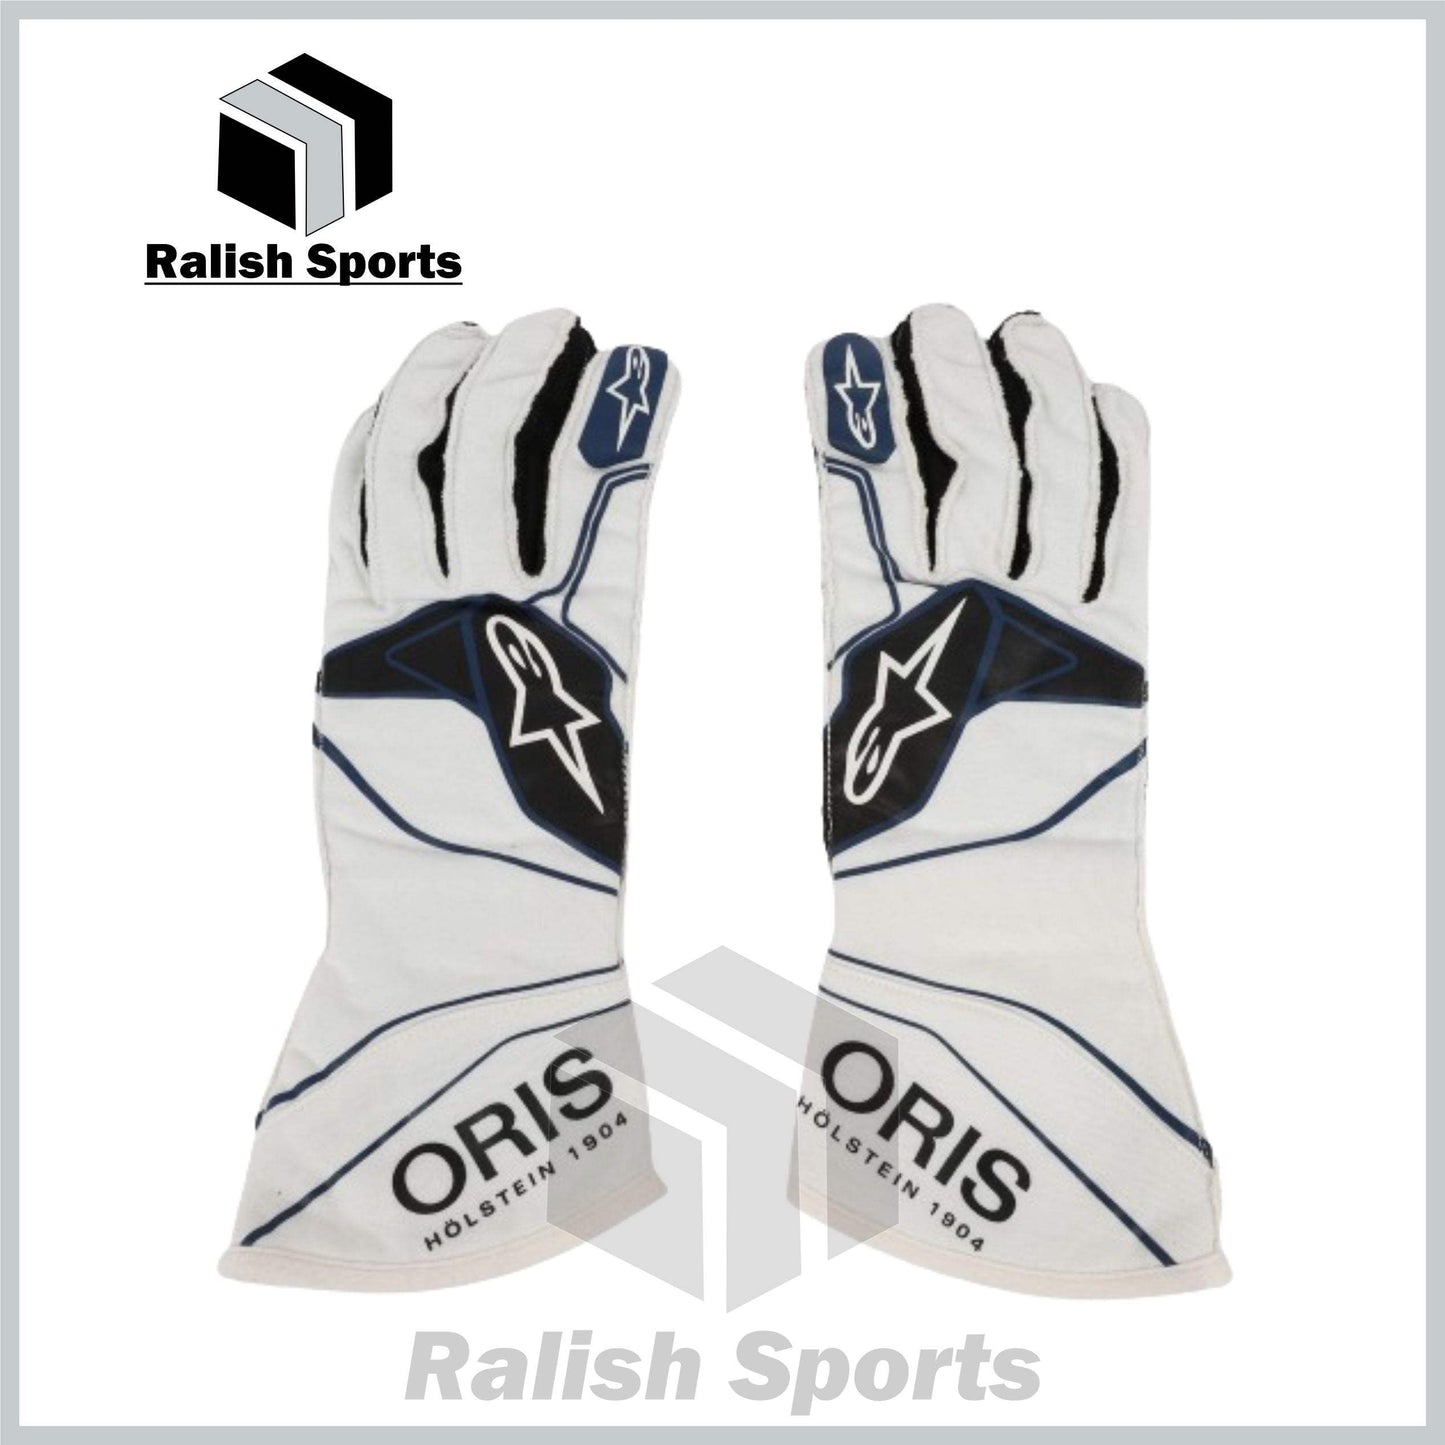 Lance Stroll 2018 Gloves - Ralish Sports